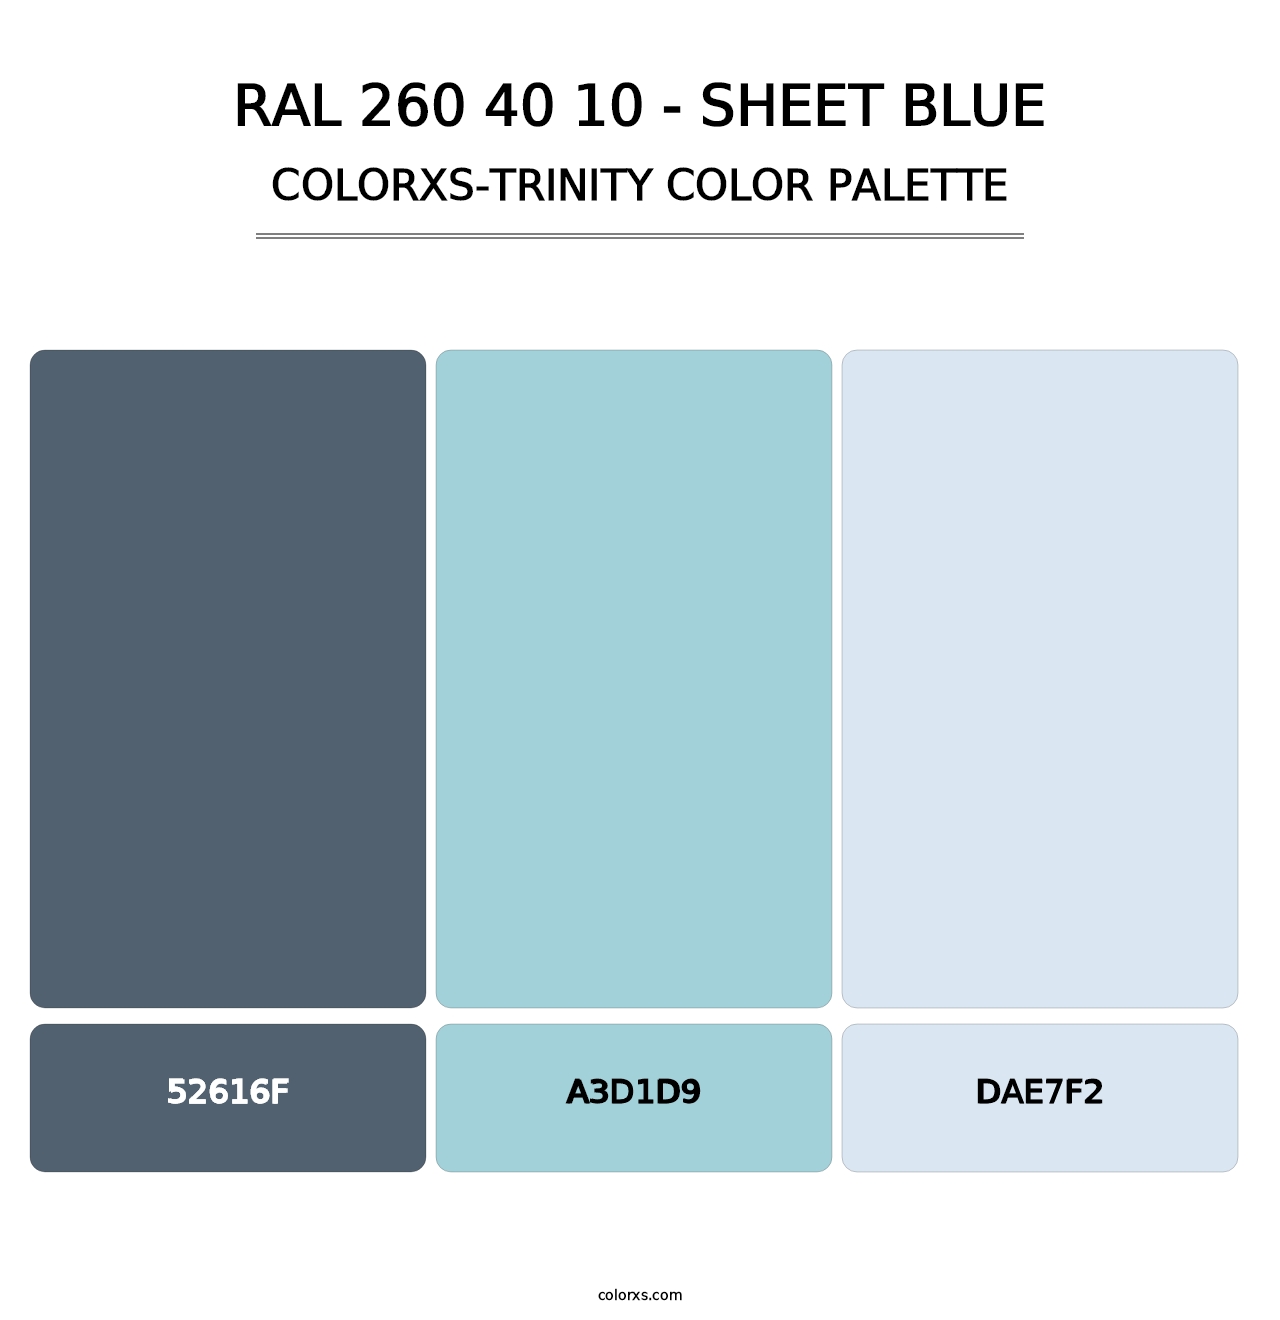 RAL 260 40 10 - Sheet Blue - Colorxs Trinity Palette